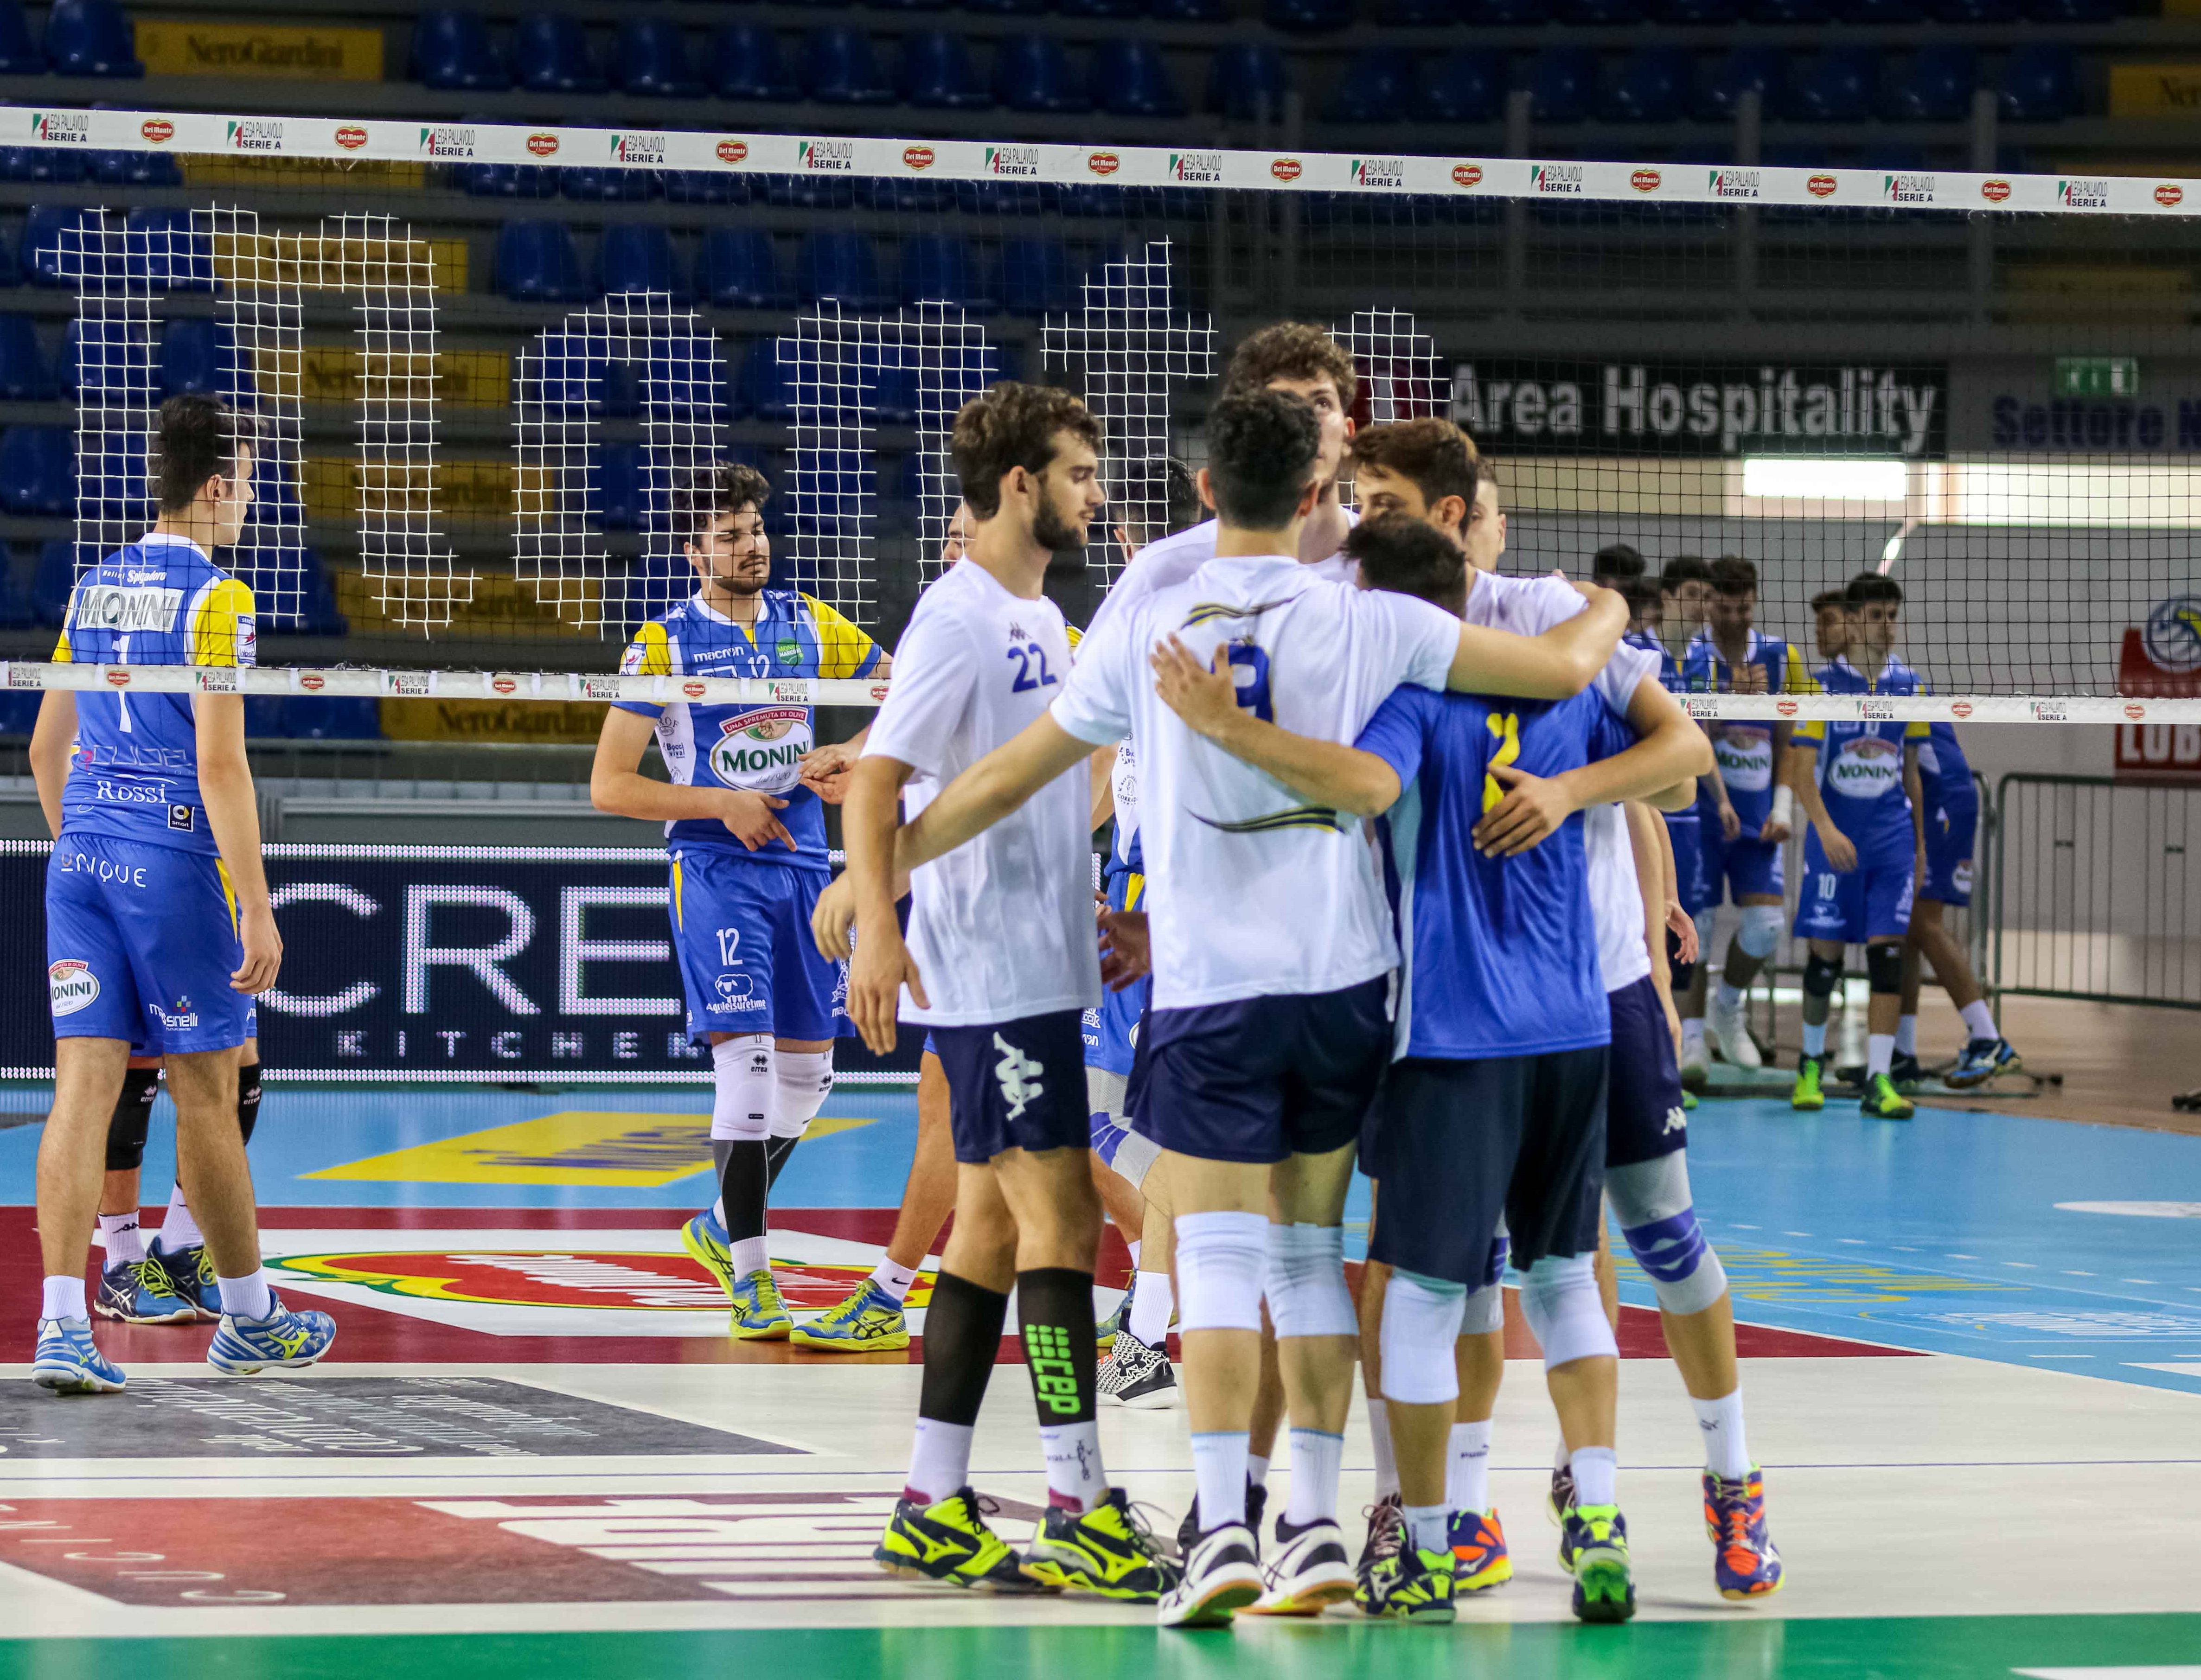 Lega Pallavolo Serie A | Italian Volleyball League – National Championships